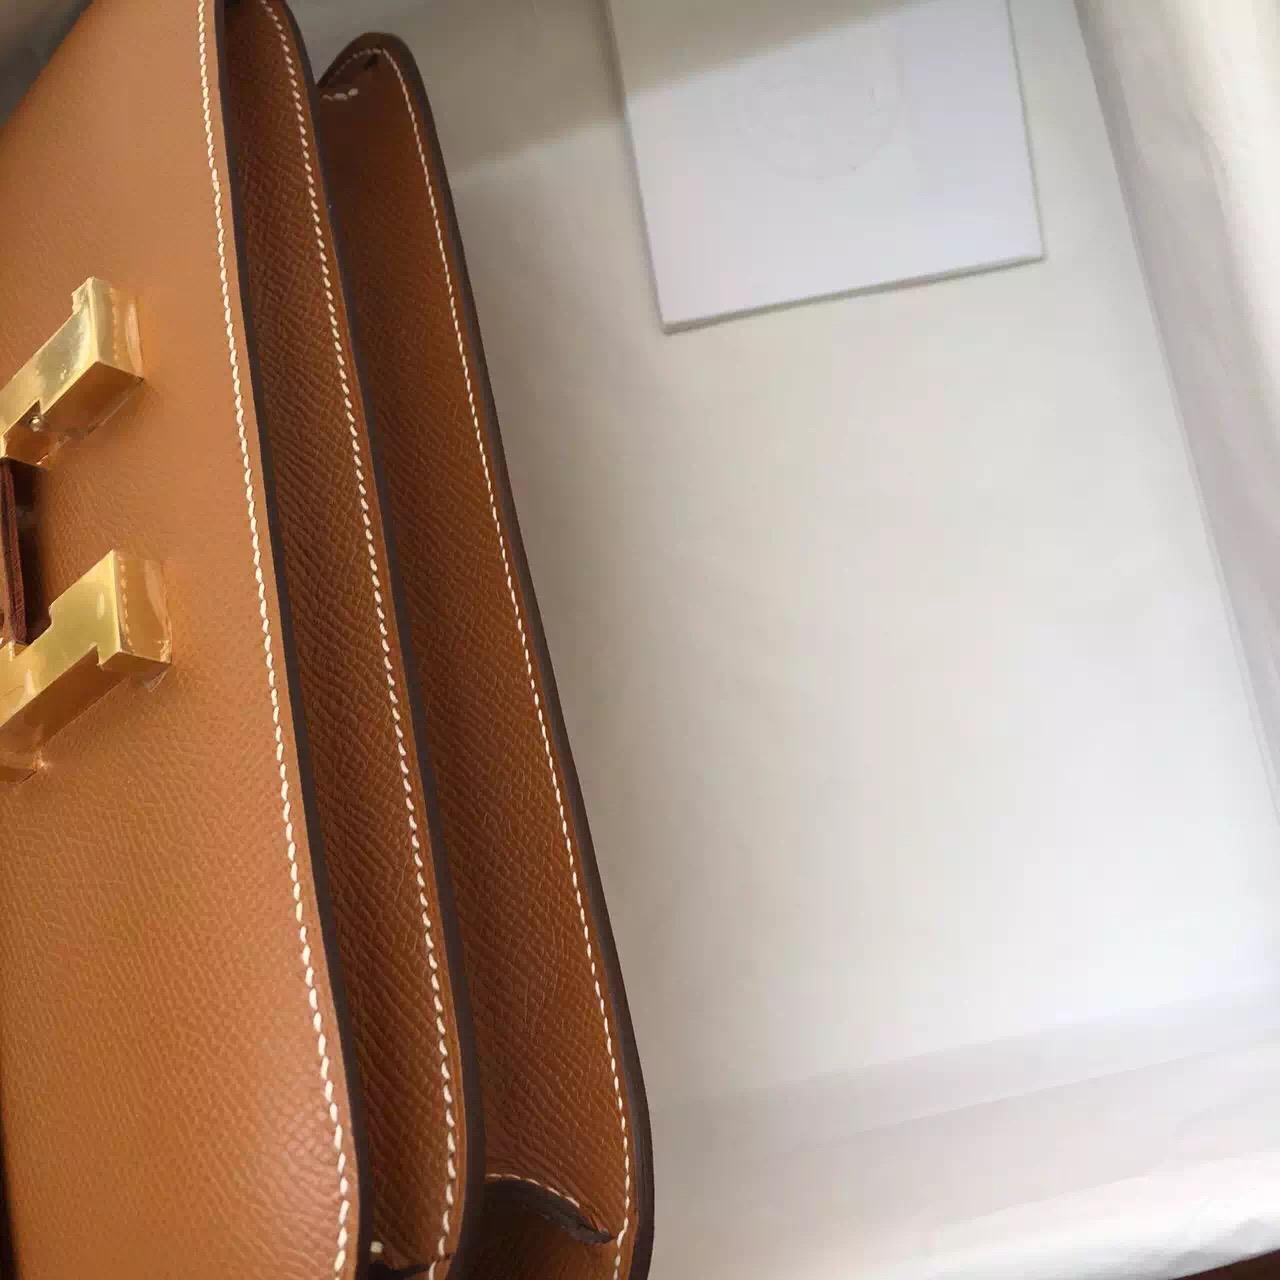 Cheap Hermes Constance Bag C37 Light Coffee Epsom Leather Ladies&#8217; Shoulder Bag